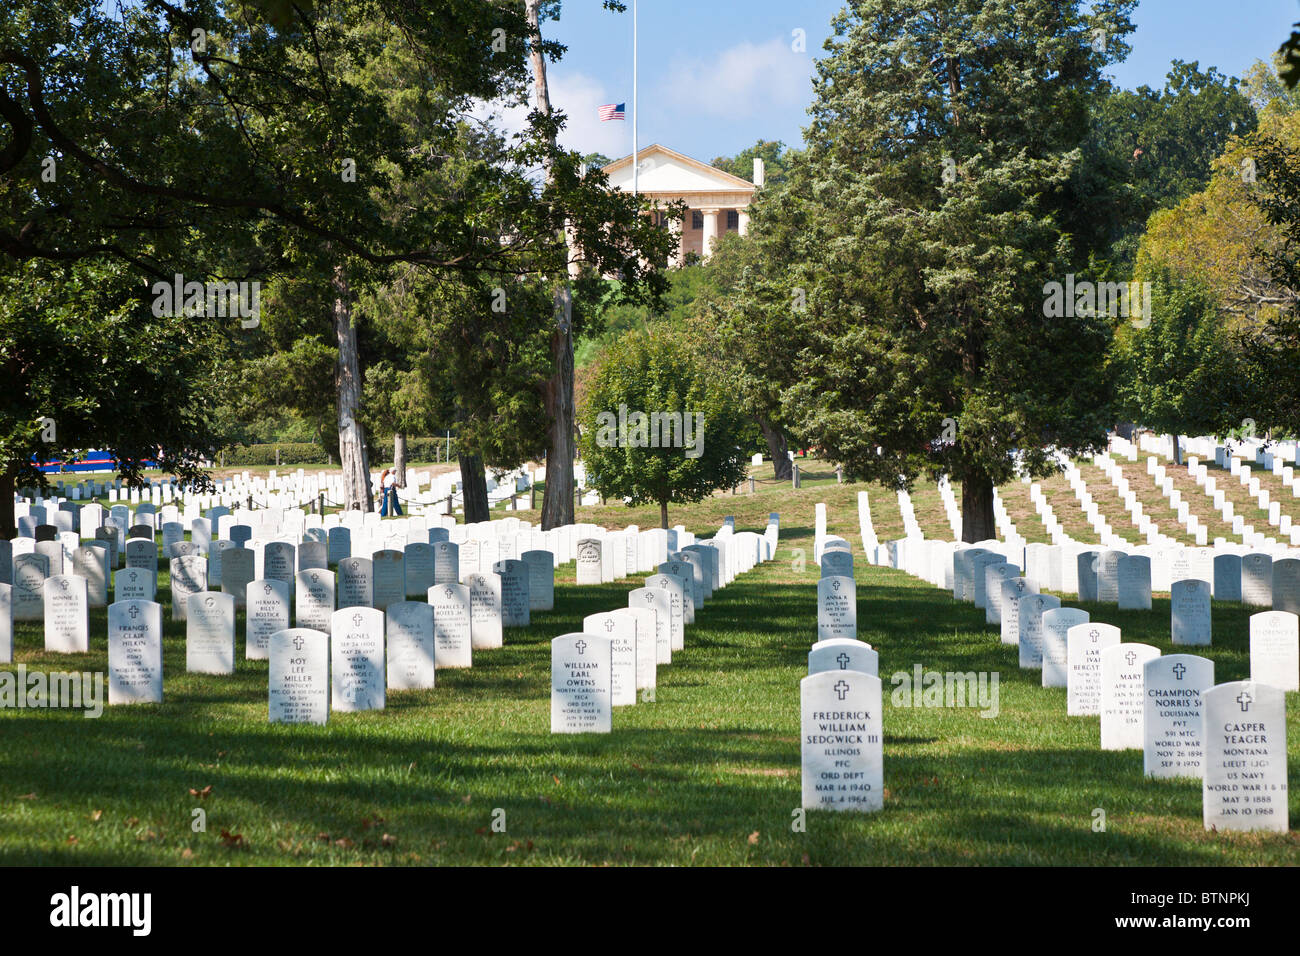 Arlington, VA - Sep 2009 - Rows of headstones in Arlington National Cemetery in Arlington, Virginia Stock Photo